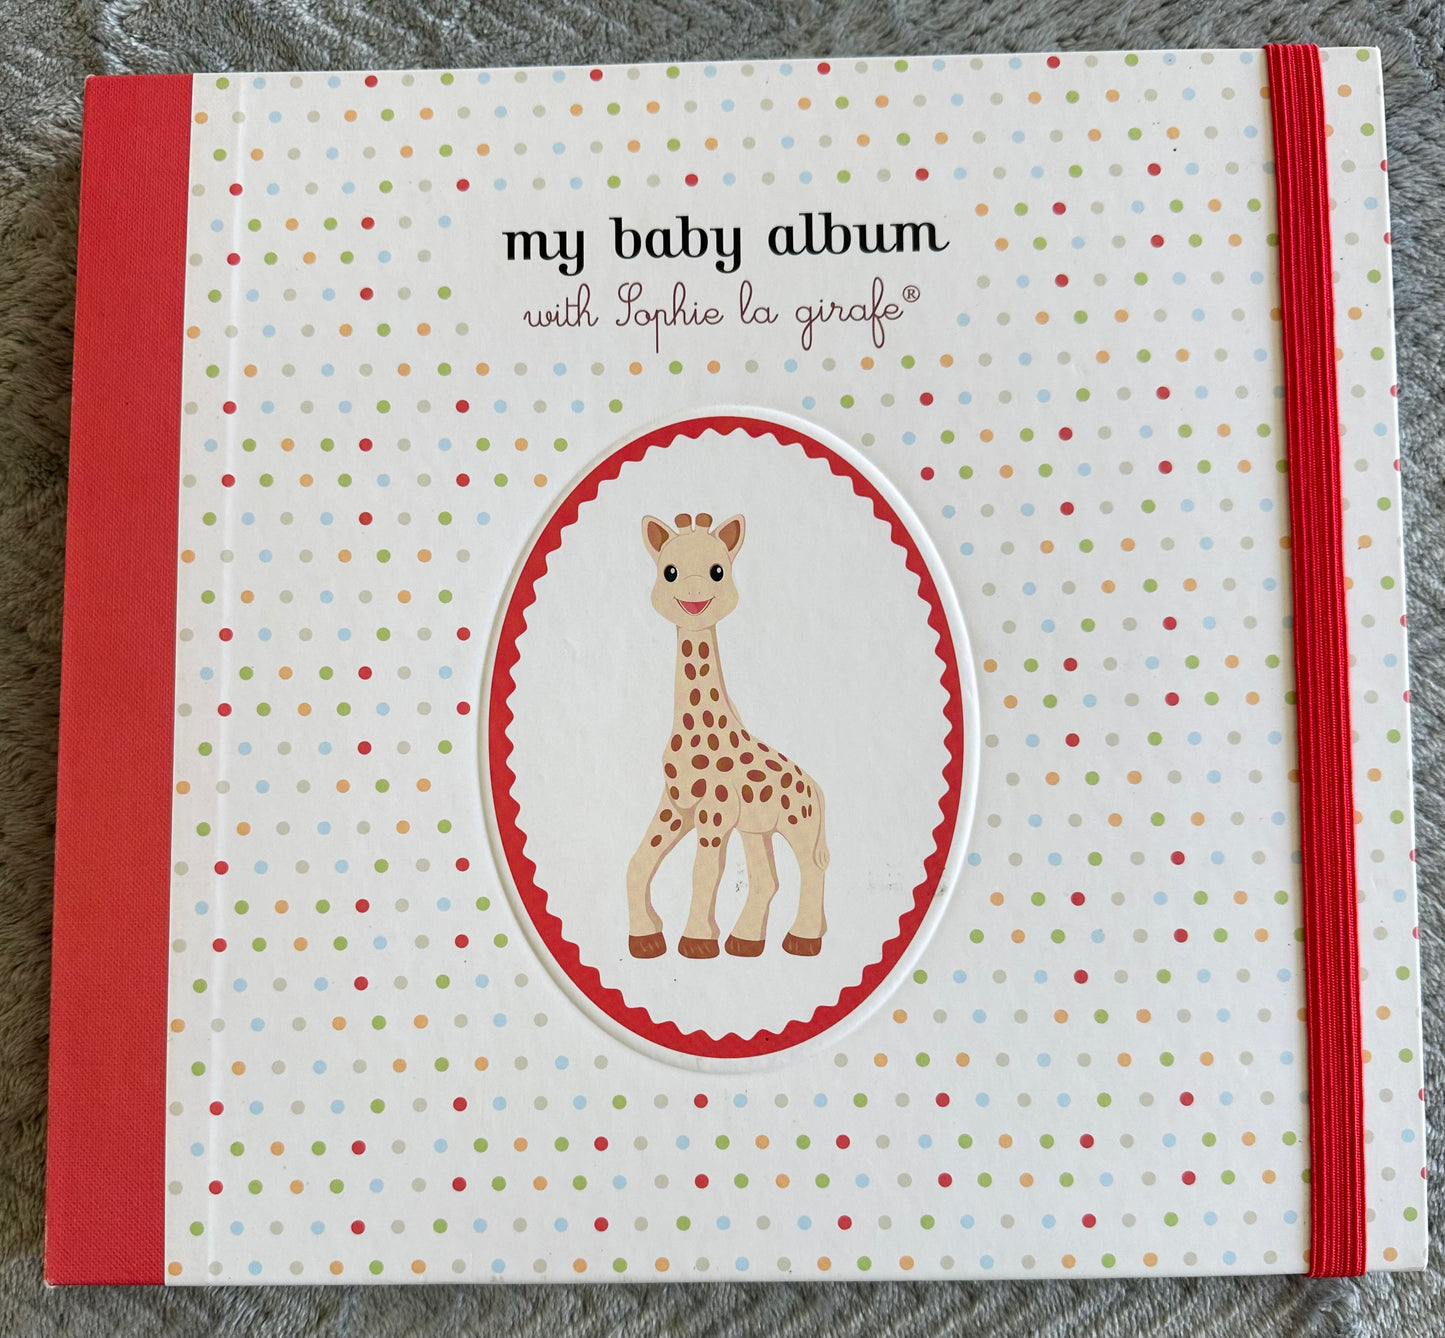 Sophie the Giraffe baby album